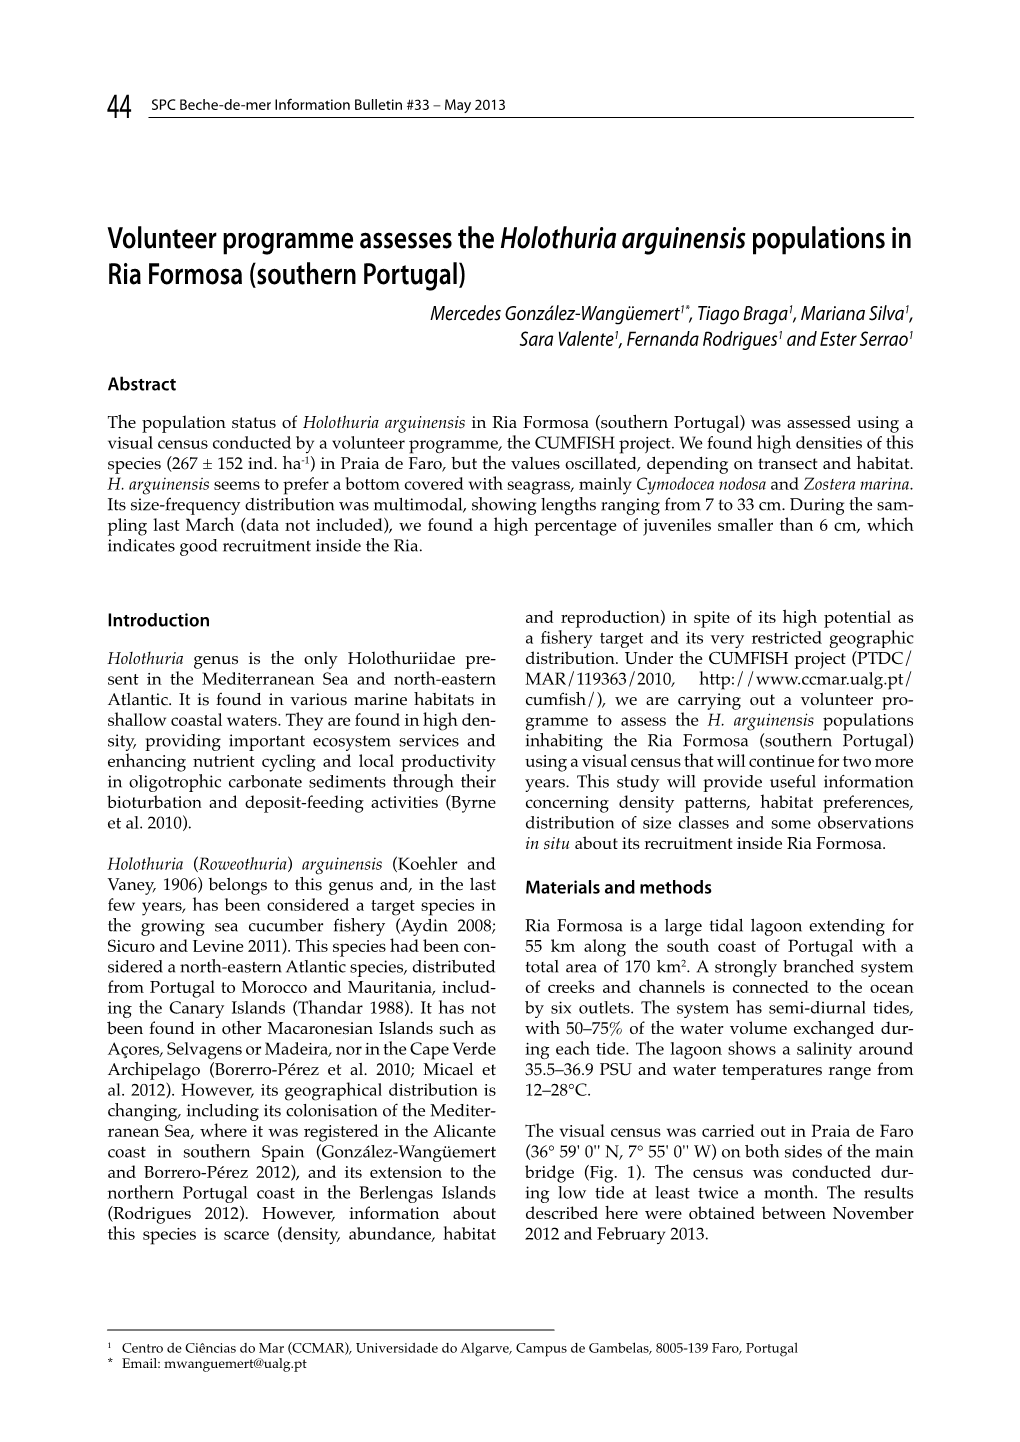 Volunteer Programme Assesses the Holothuria Arguinensis Populations